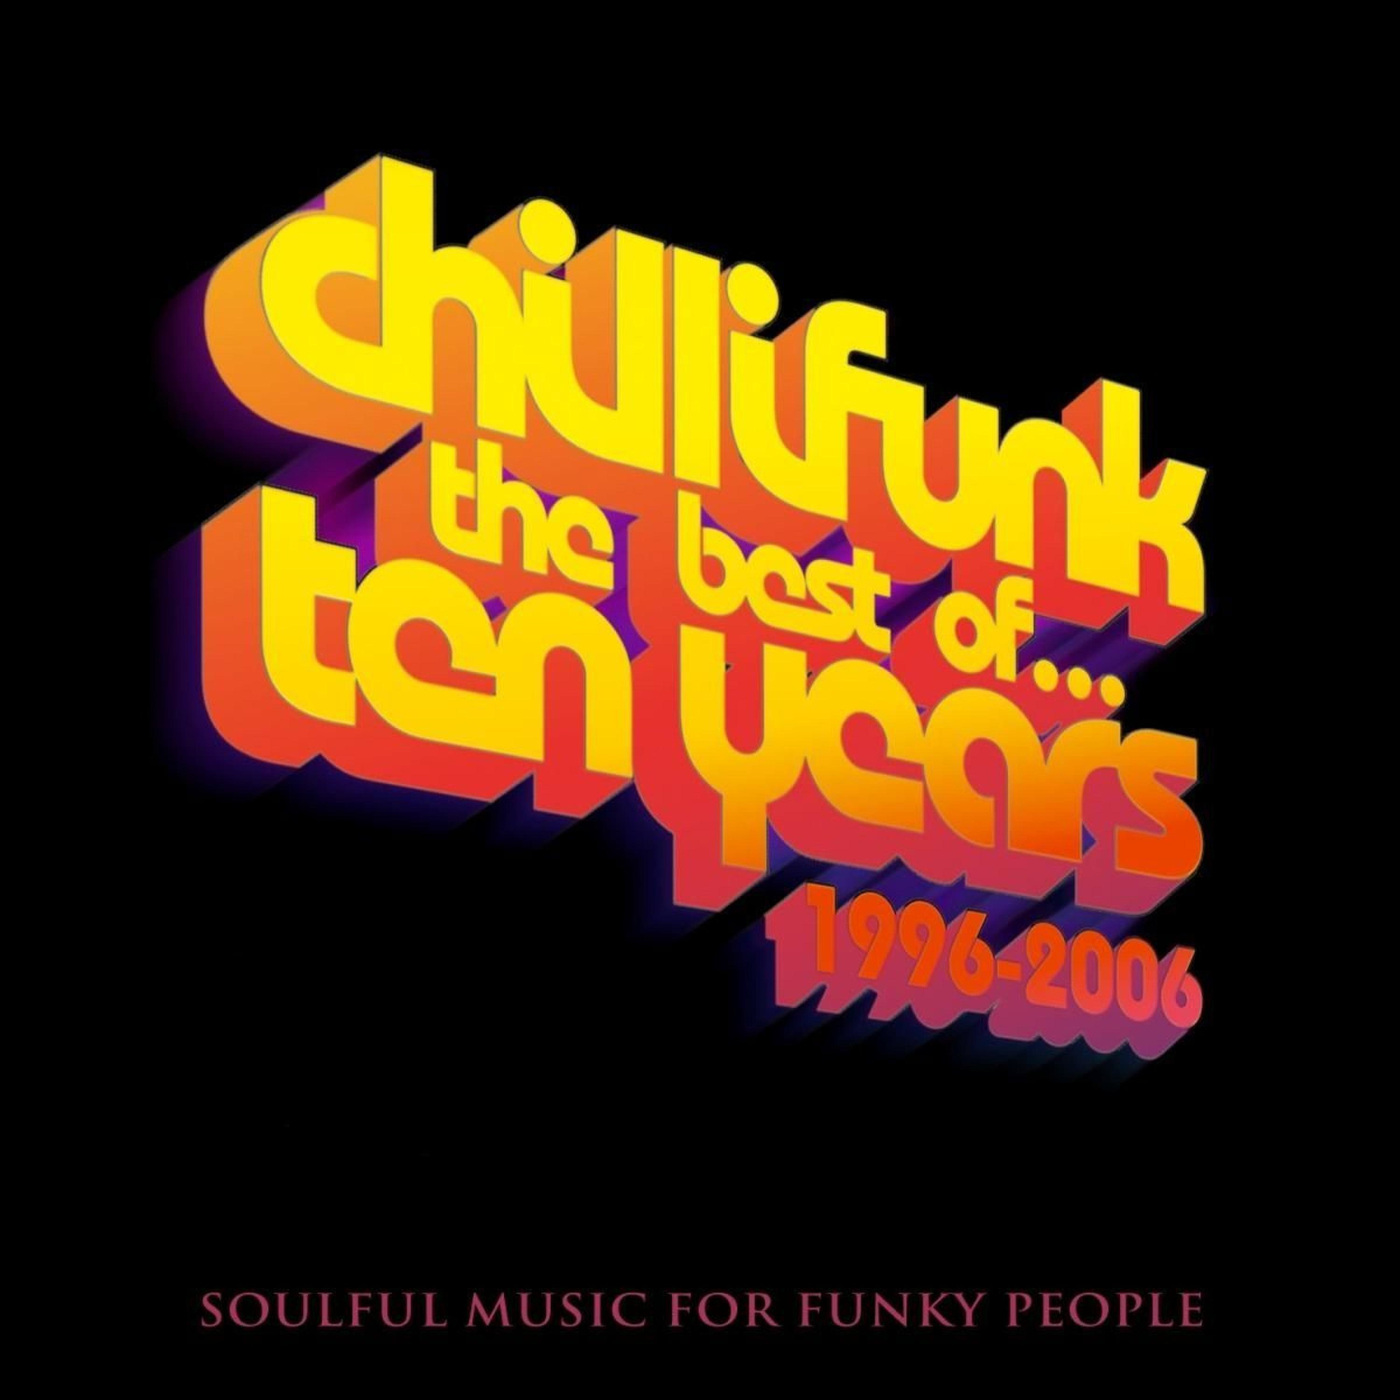 VA - The Best of Chillifunk Ten Years 1996-2006 (Notenshun Bonus DJ Mix) / Chillifunk